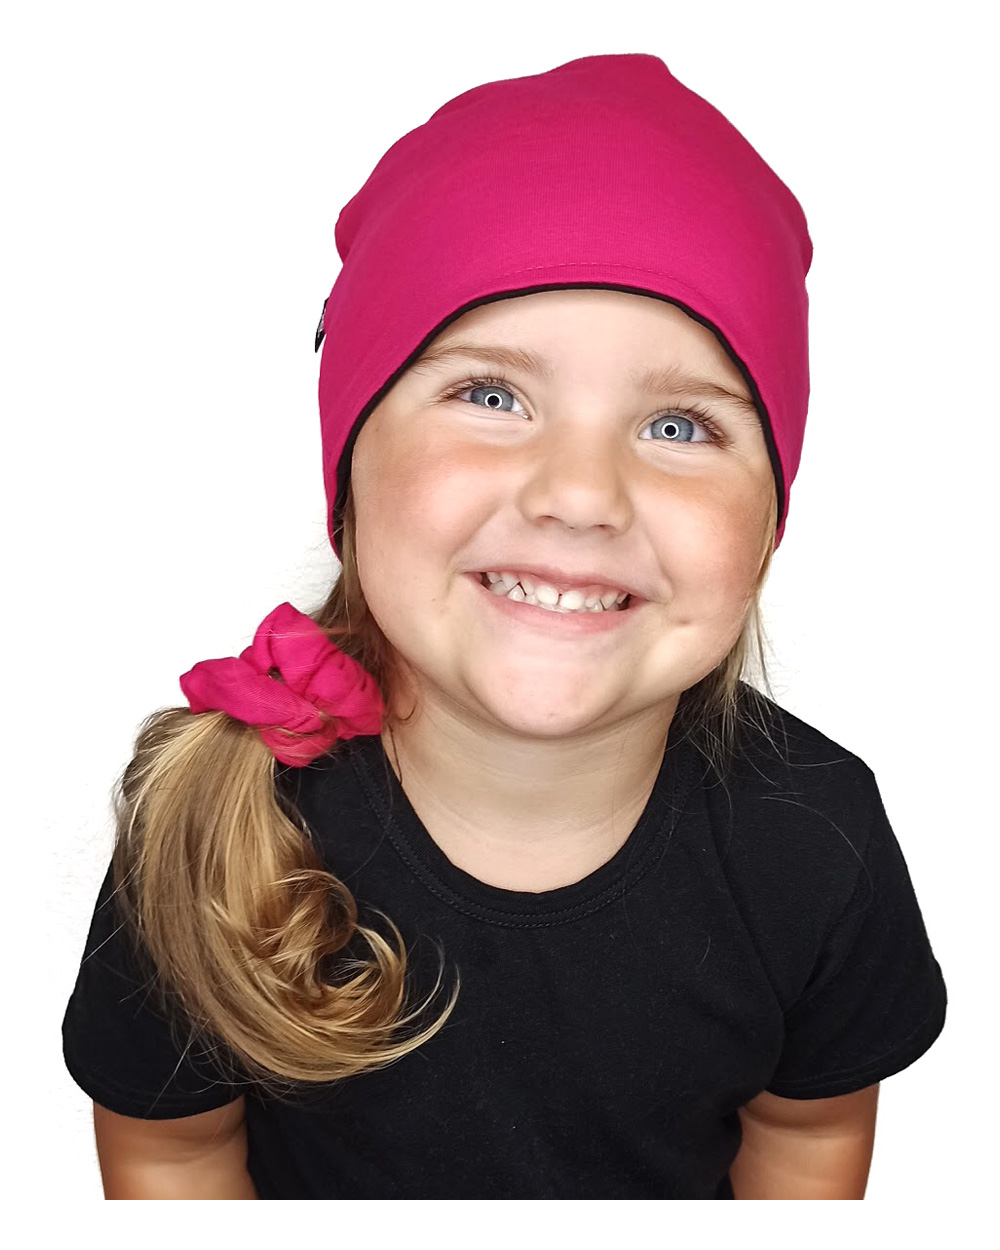 Detská čiapka bavlněnáá, obojstranná, čierna + sýto ružová